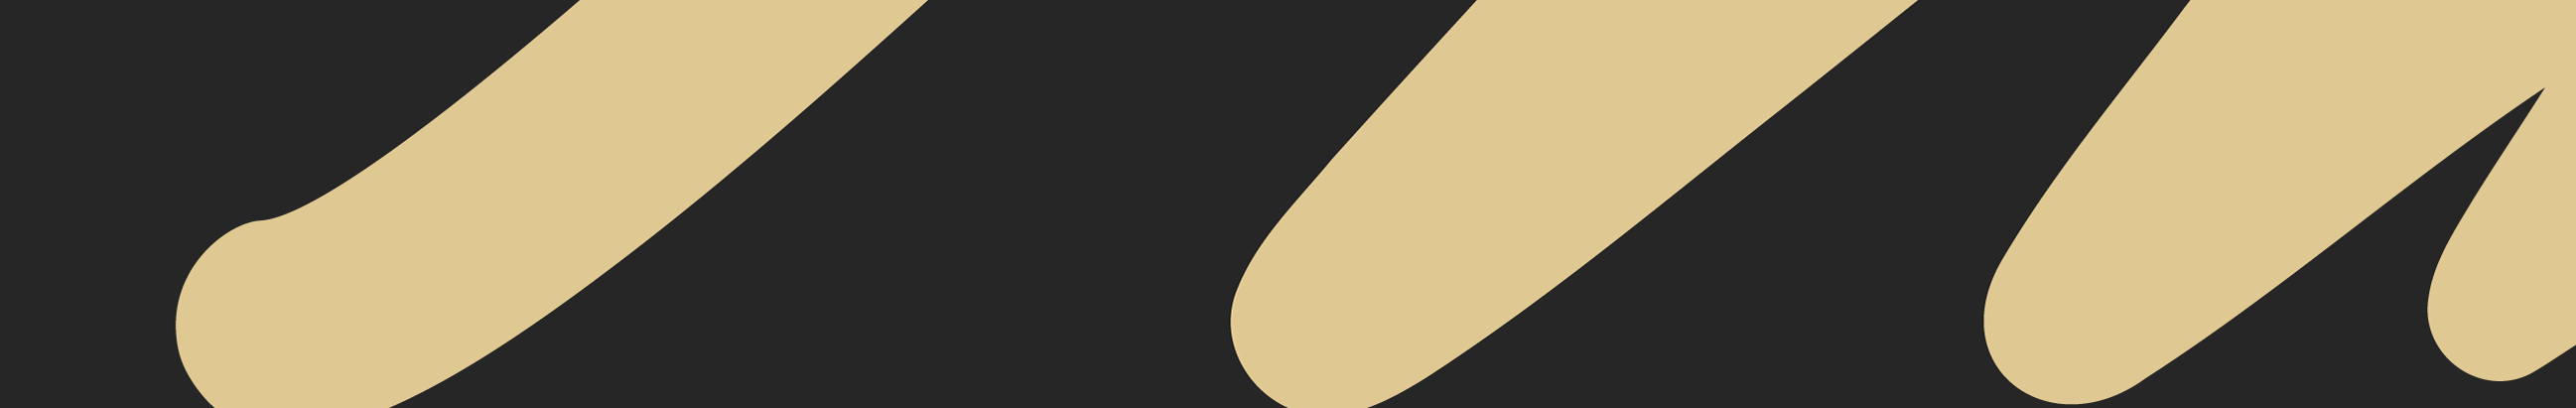 Maionese Design's profile banner